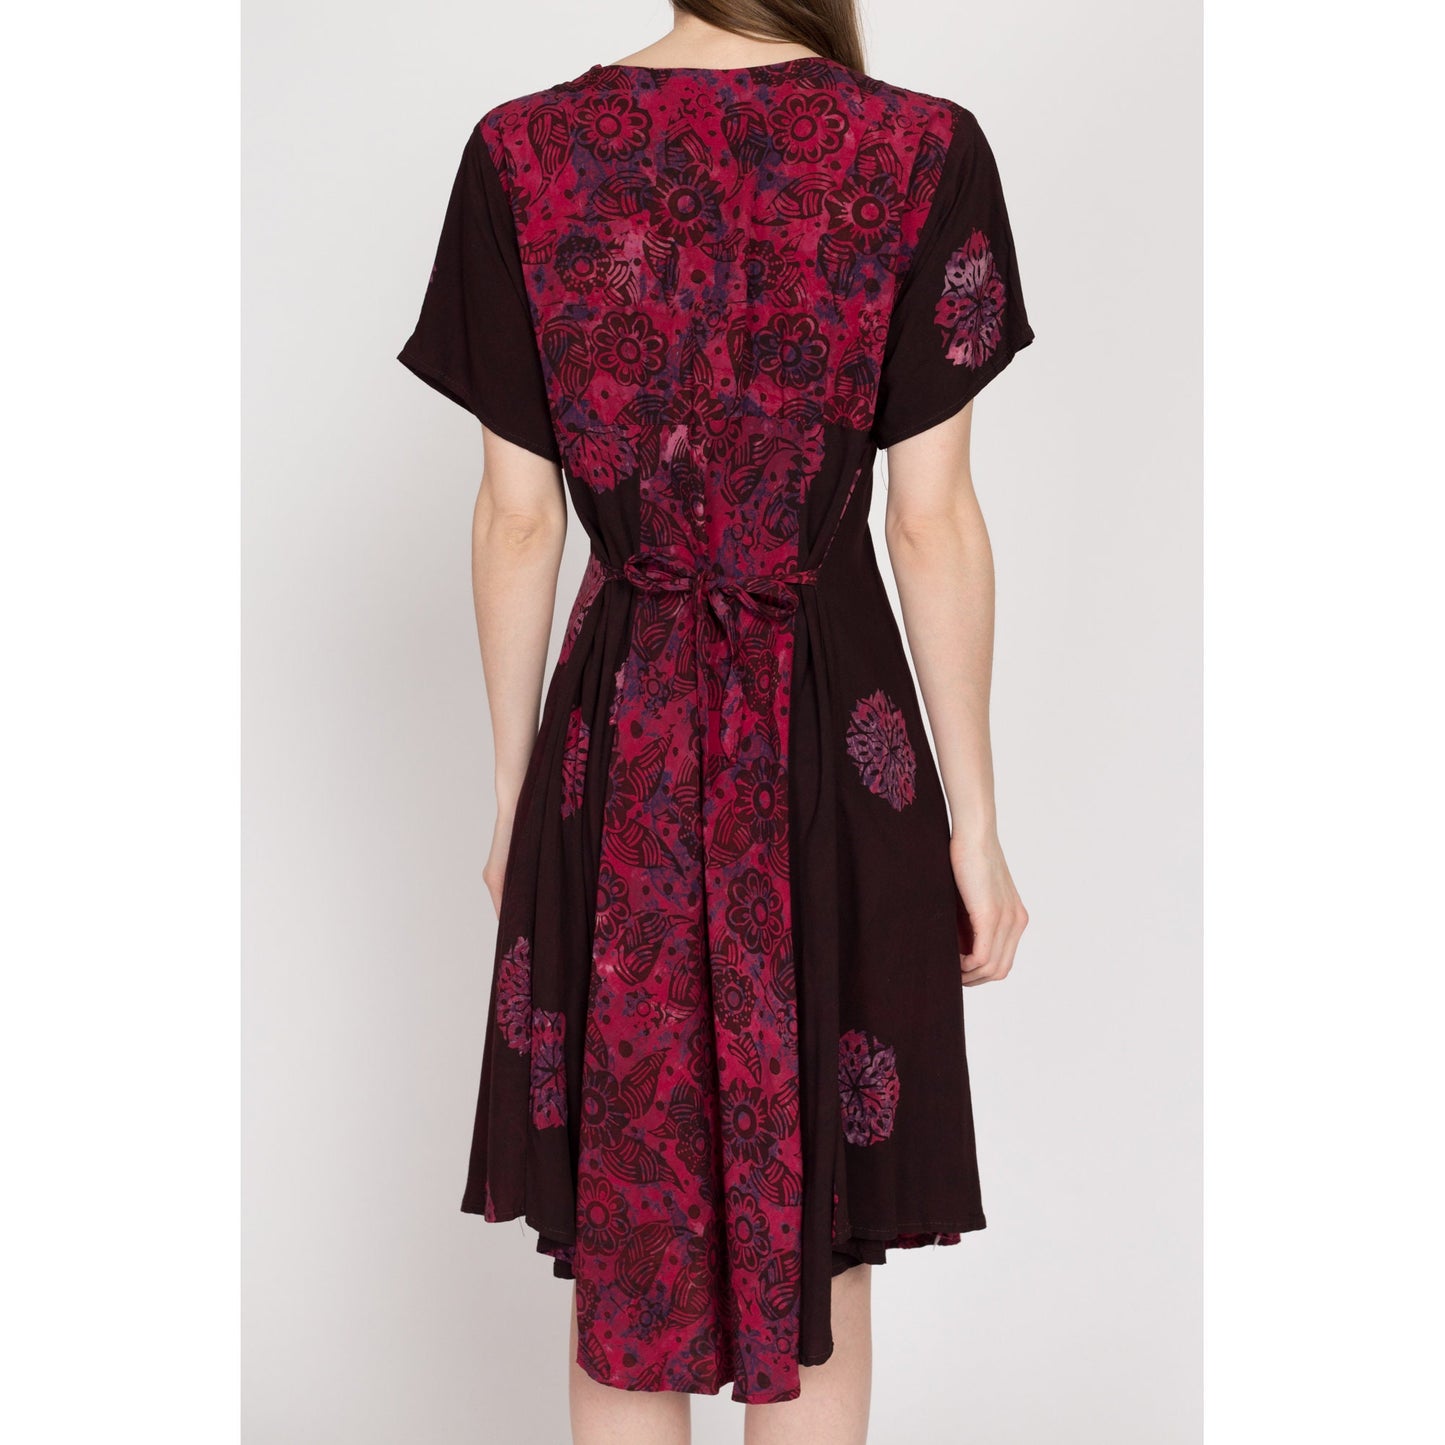 Medium 90s Boho Red & Brown Batik Print Midi Sundress | Vintage A Line Scoop Neck Short Sleeve Tie Back Dress